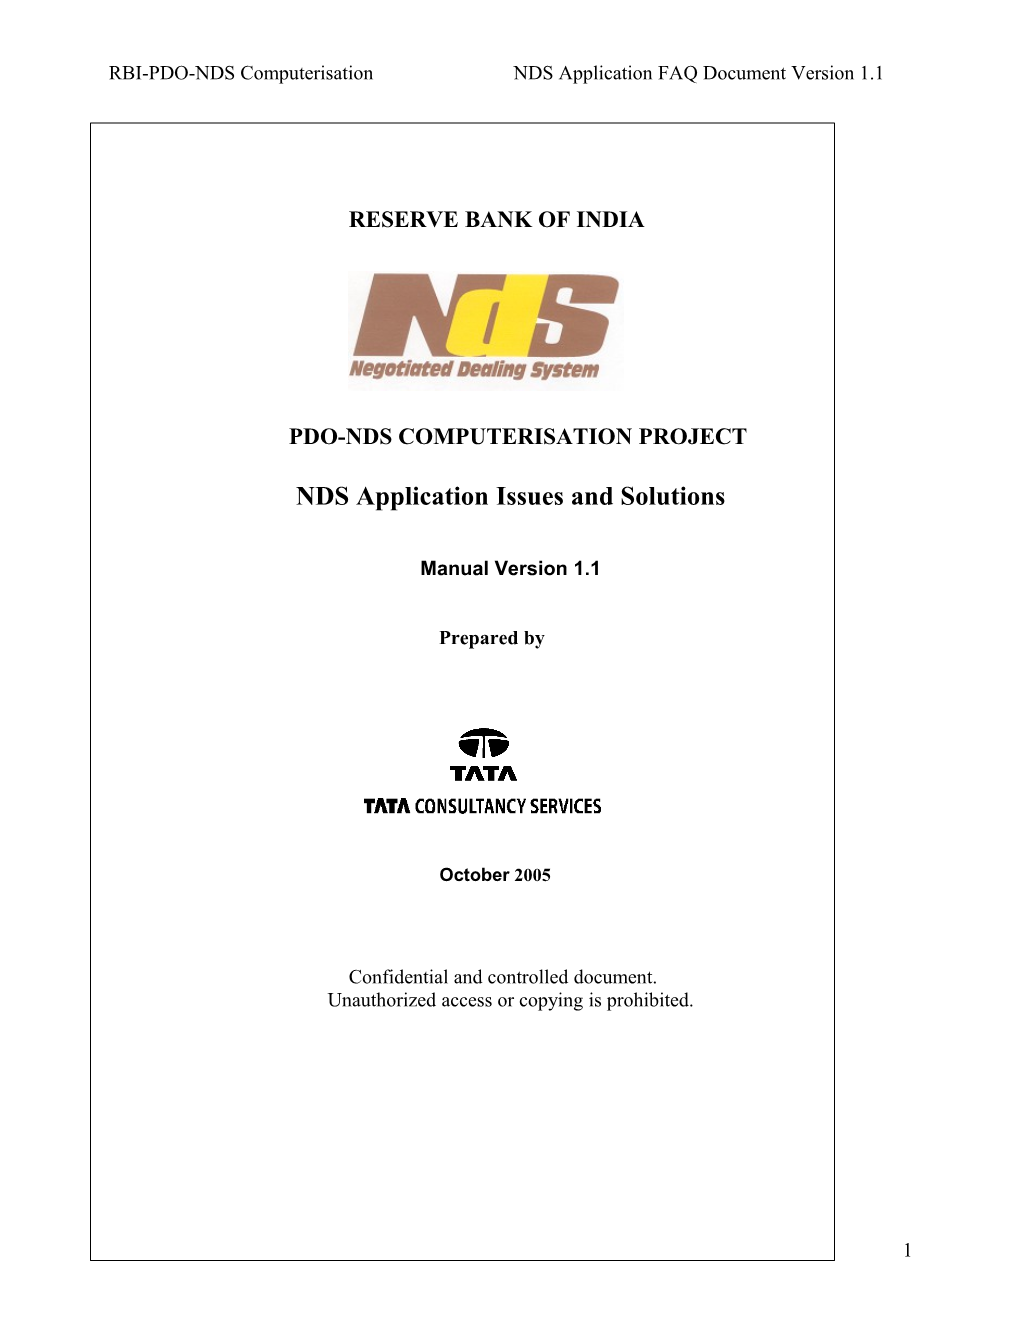 NDS Application Errors